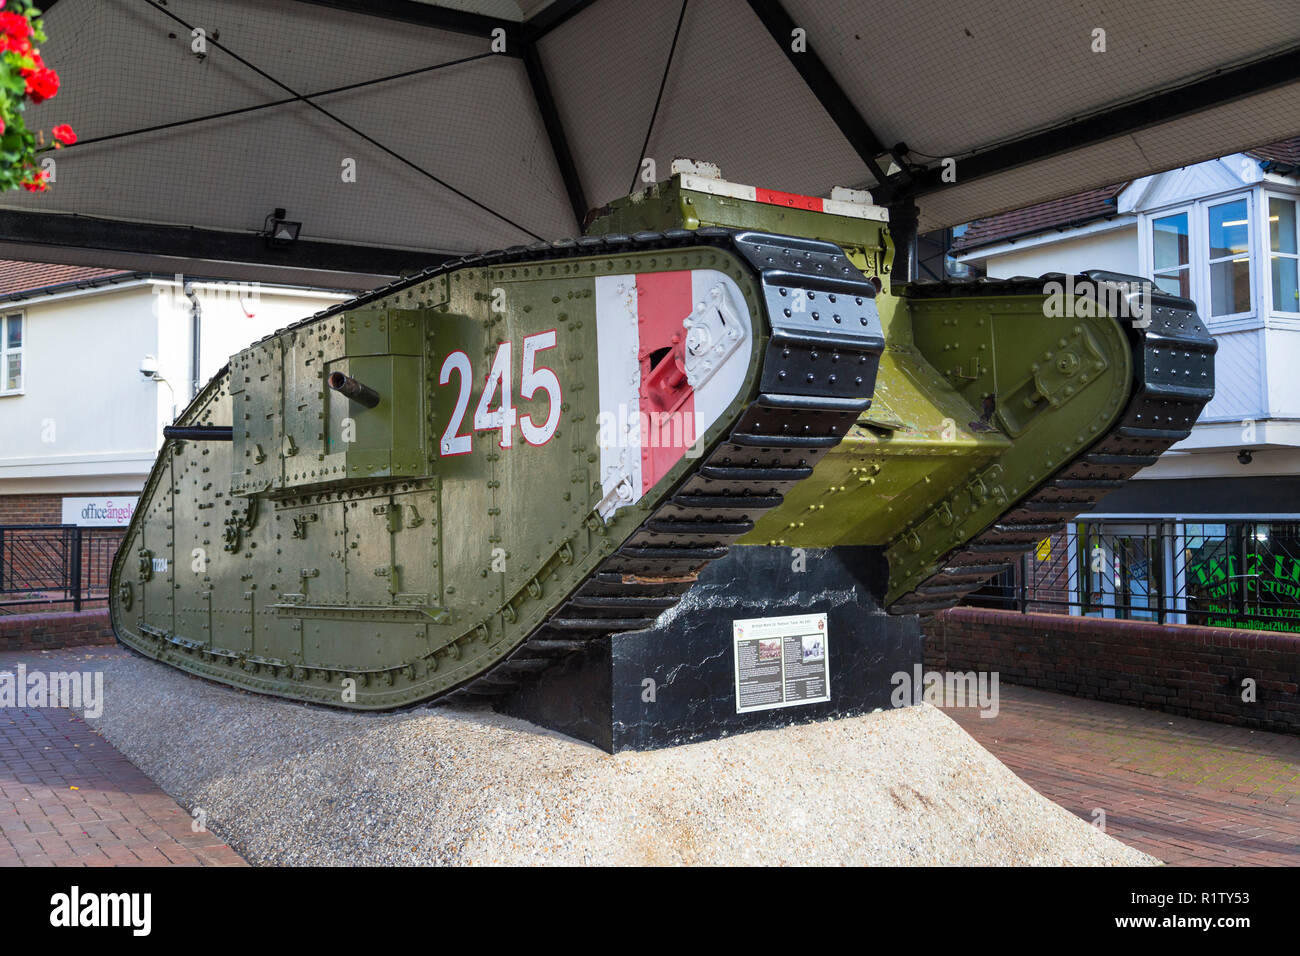 British mark IV female tank, No 245, ashford high street, kent, uk Stock Photo